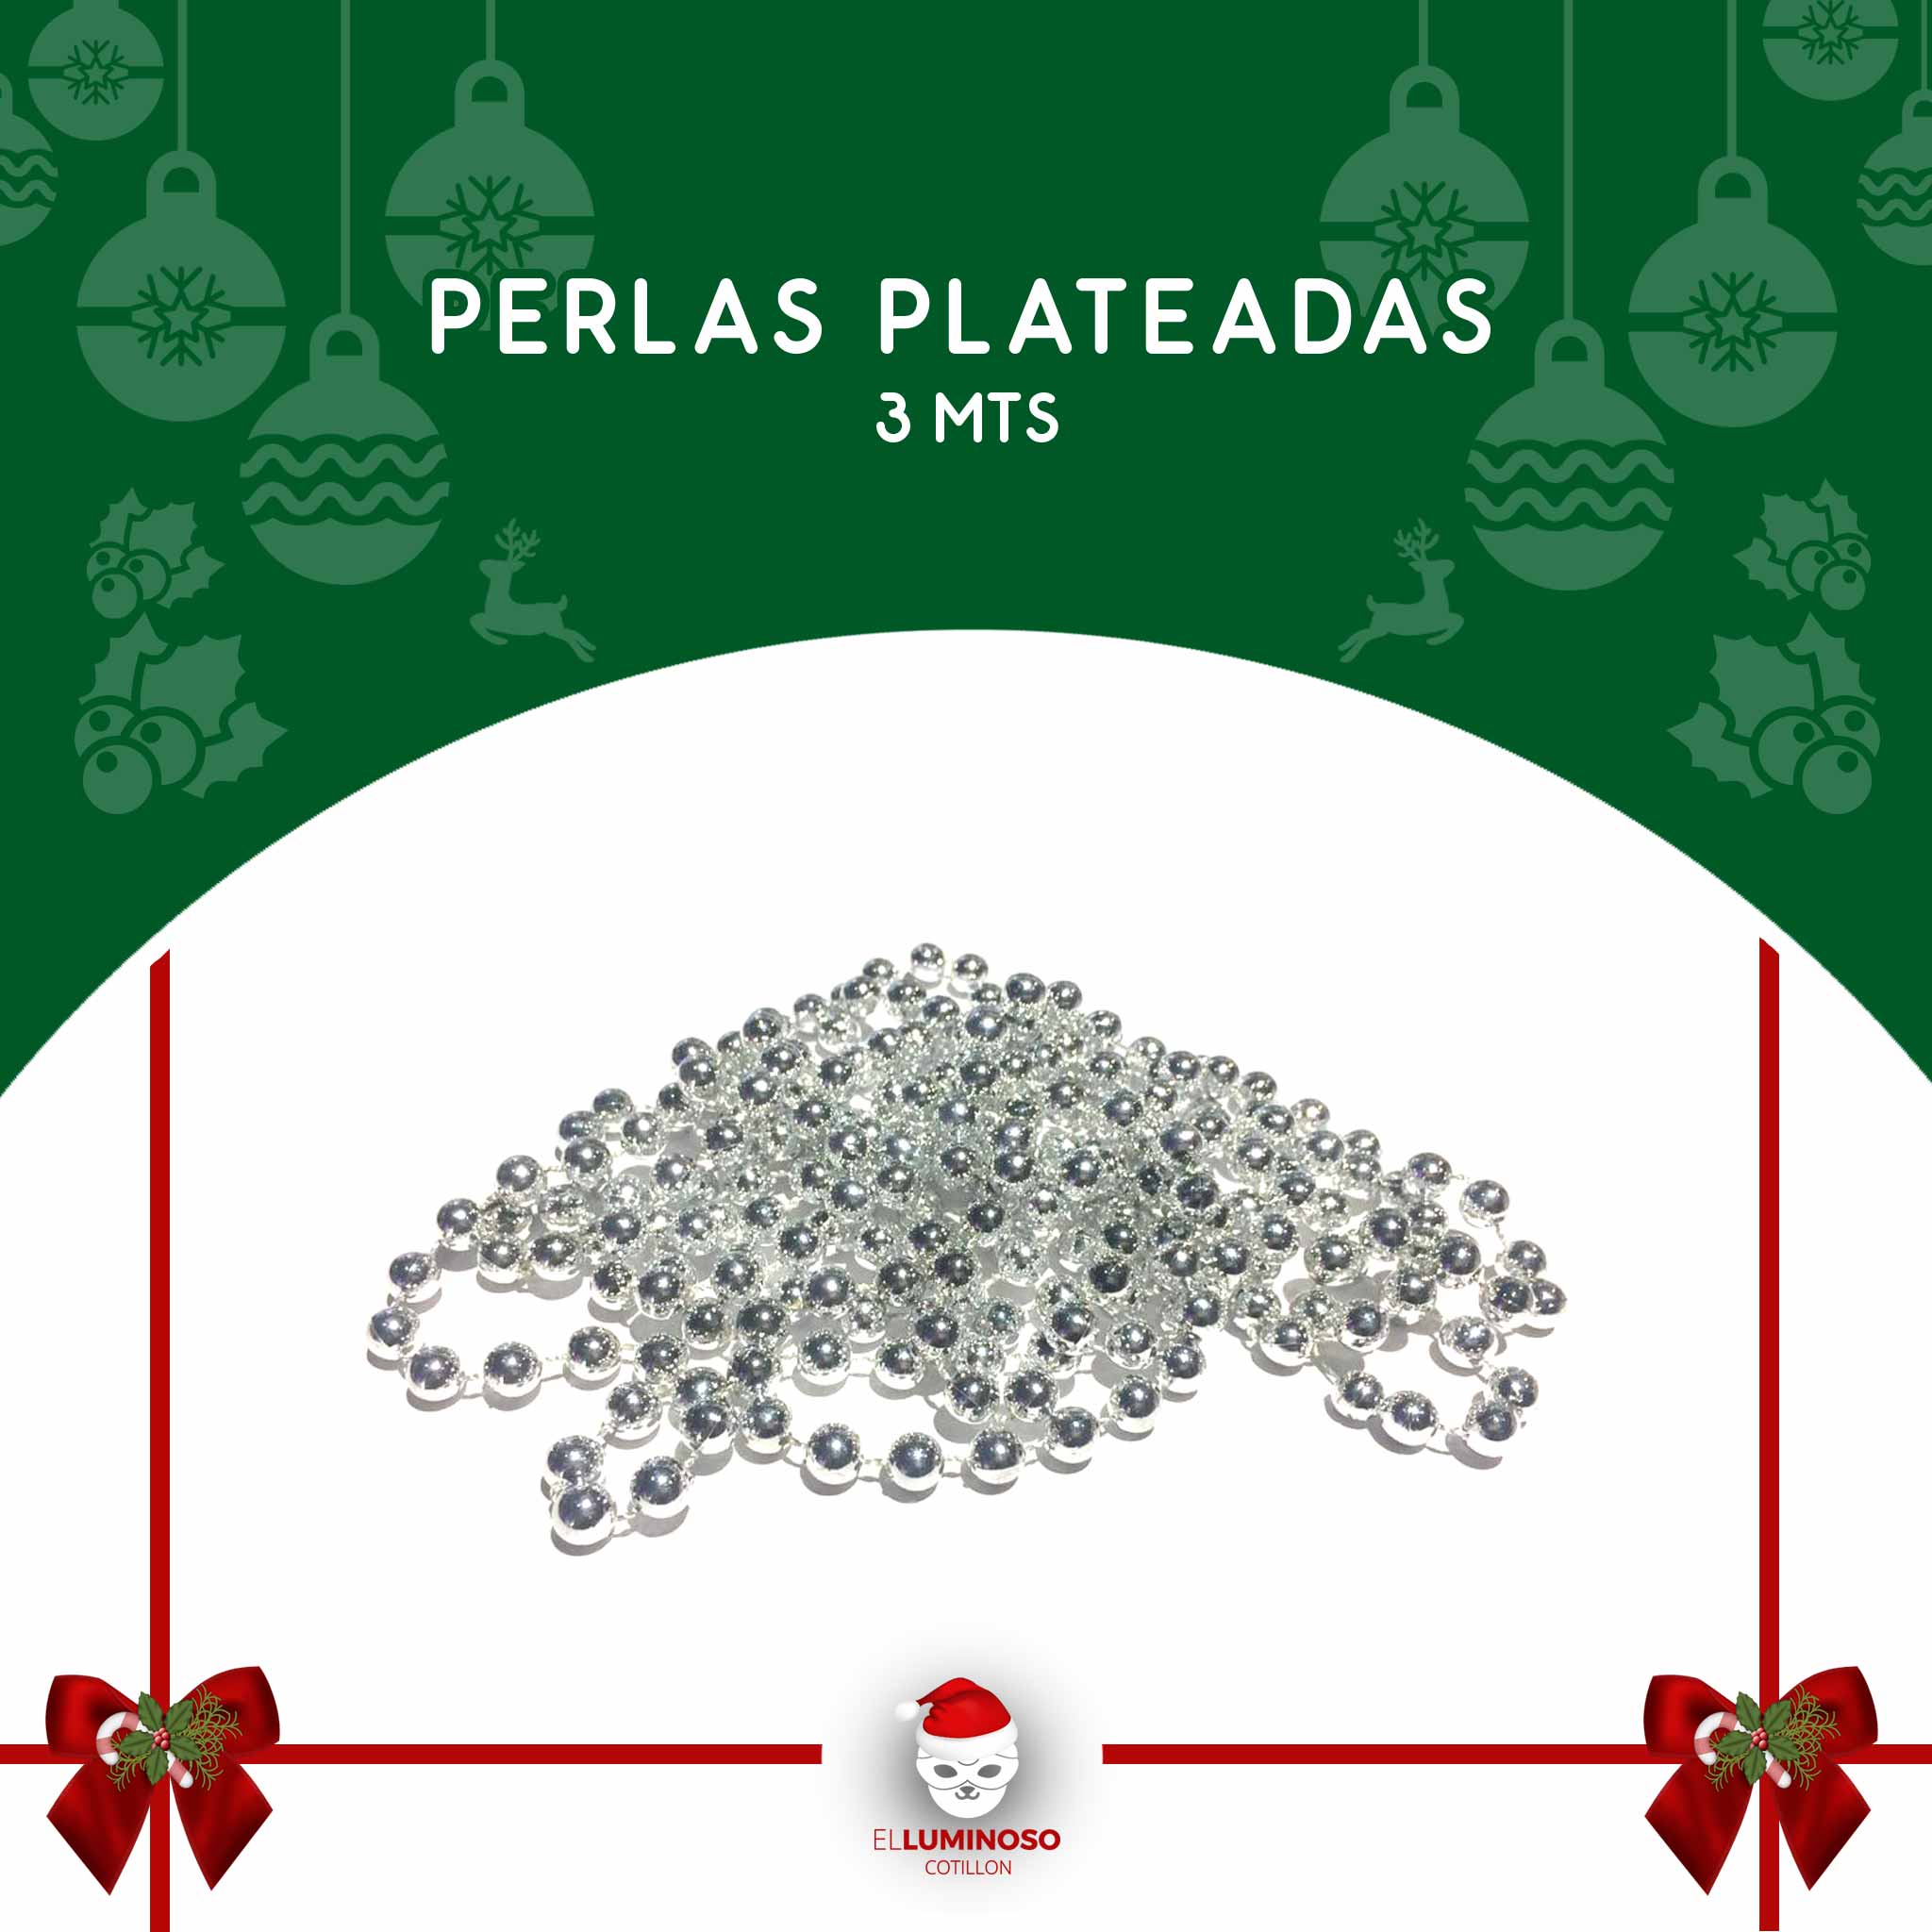 PERLAS PLATEADAS 3 MTS